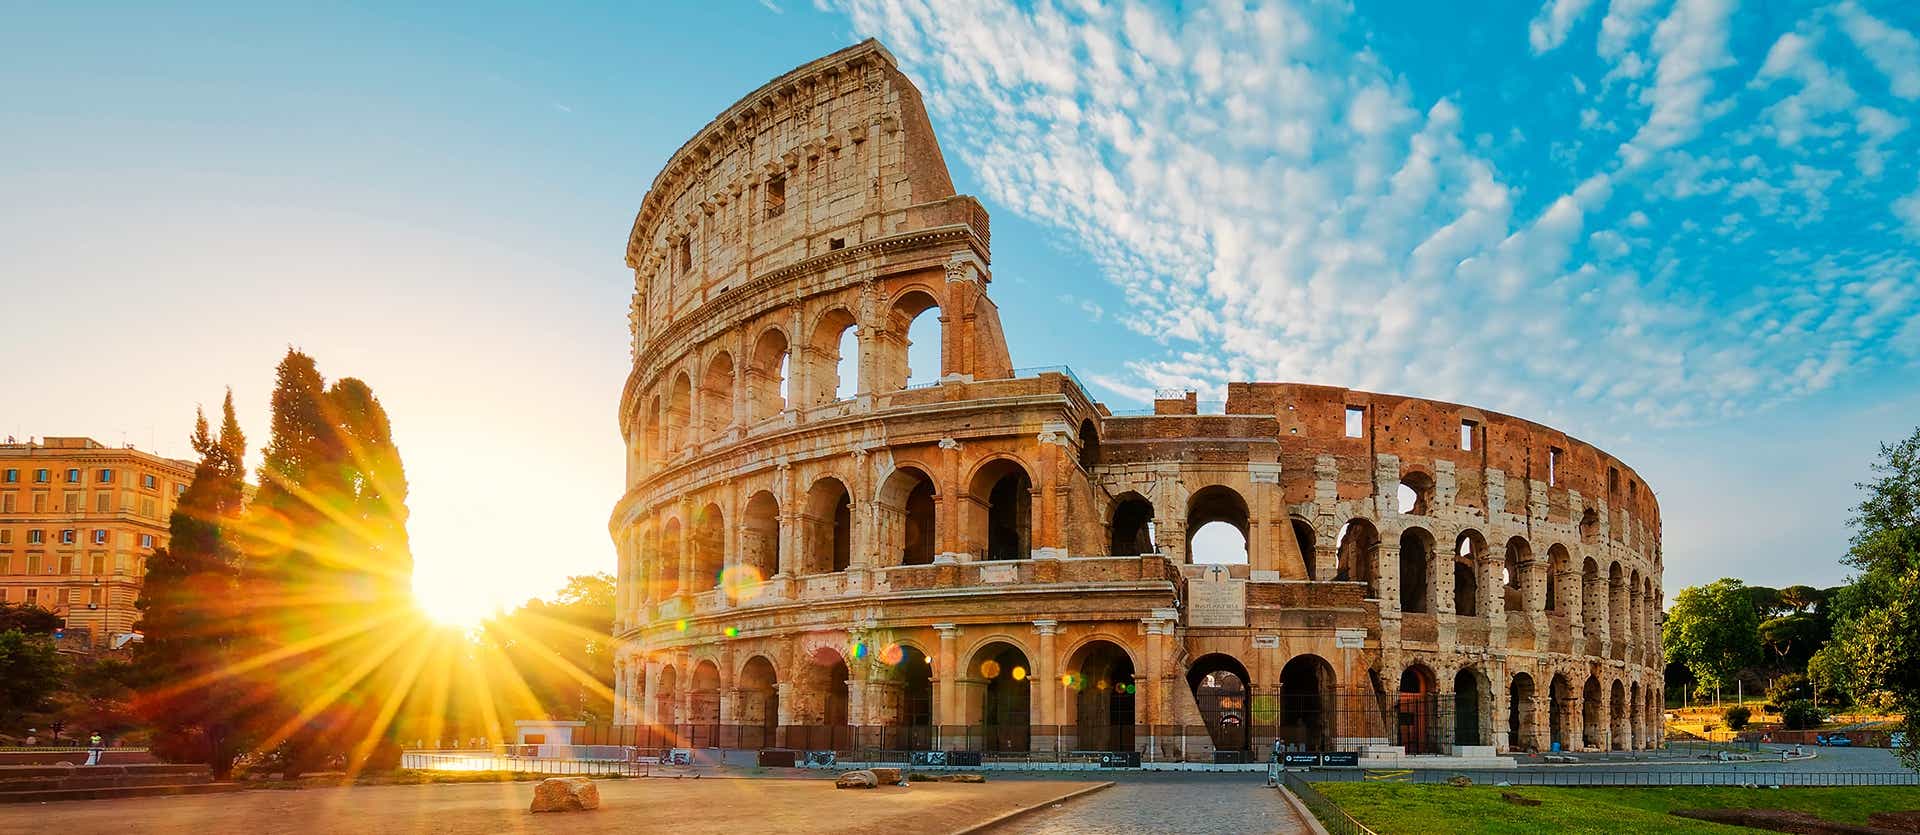 Colosseum <span class="iconos separador"></span> Rome <span class="iconos separador"></span> Italy